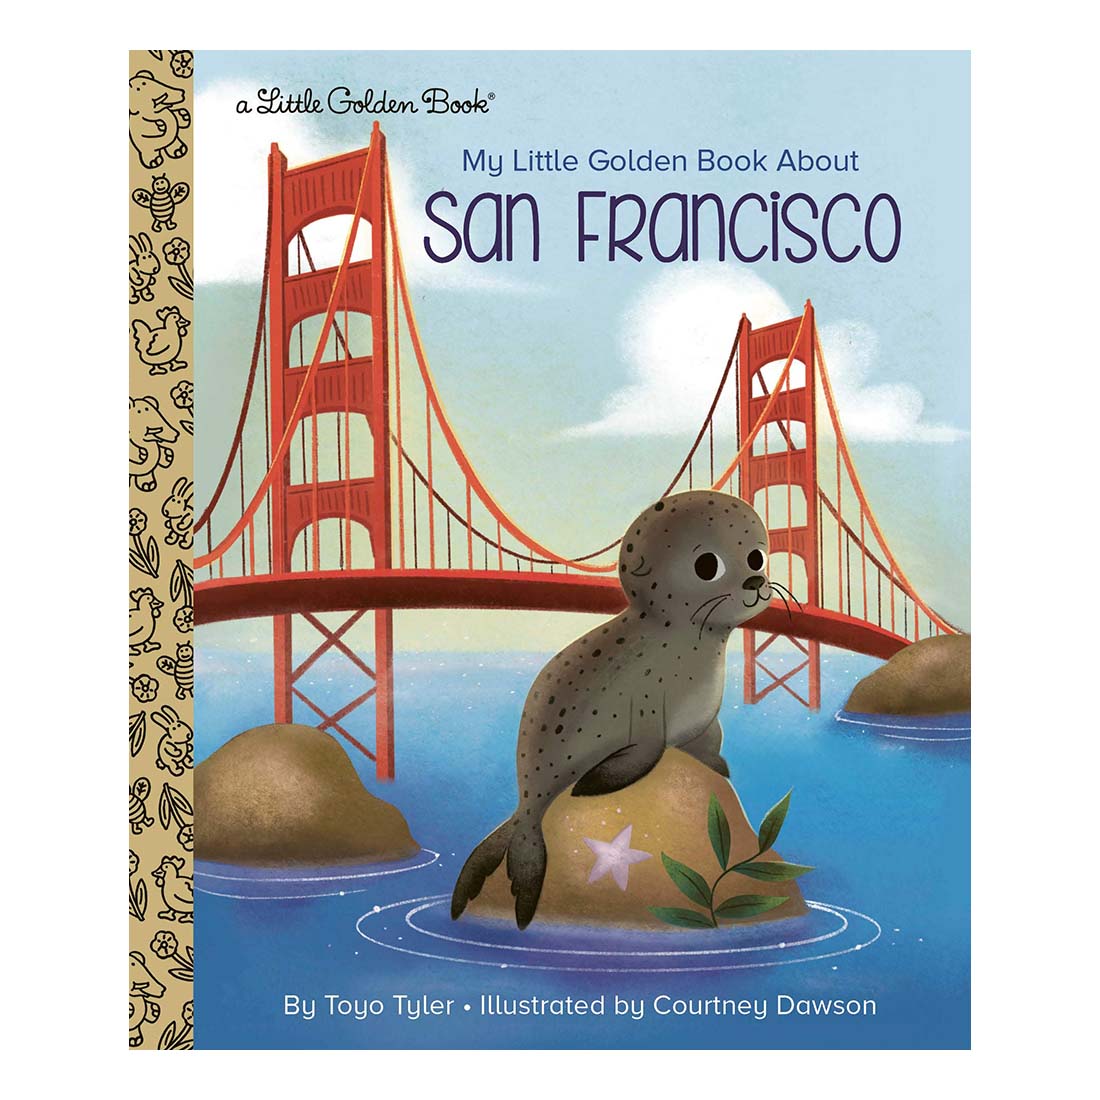 My Little Golden Book About San Francisco